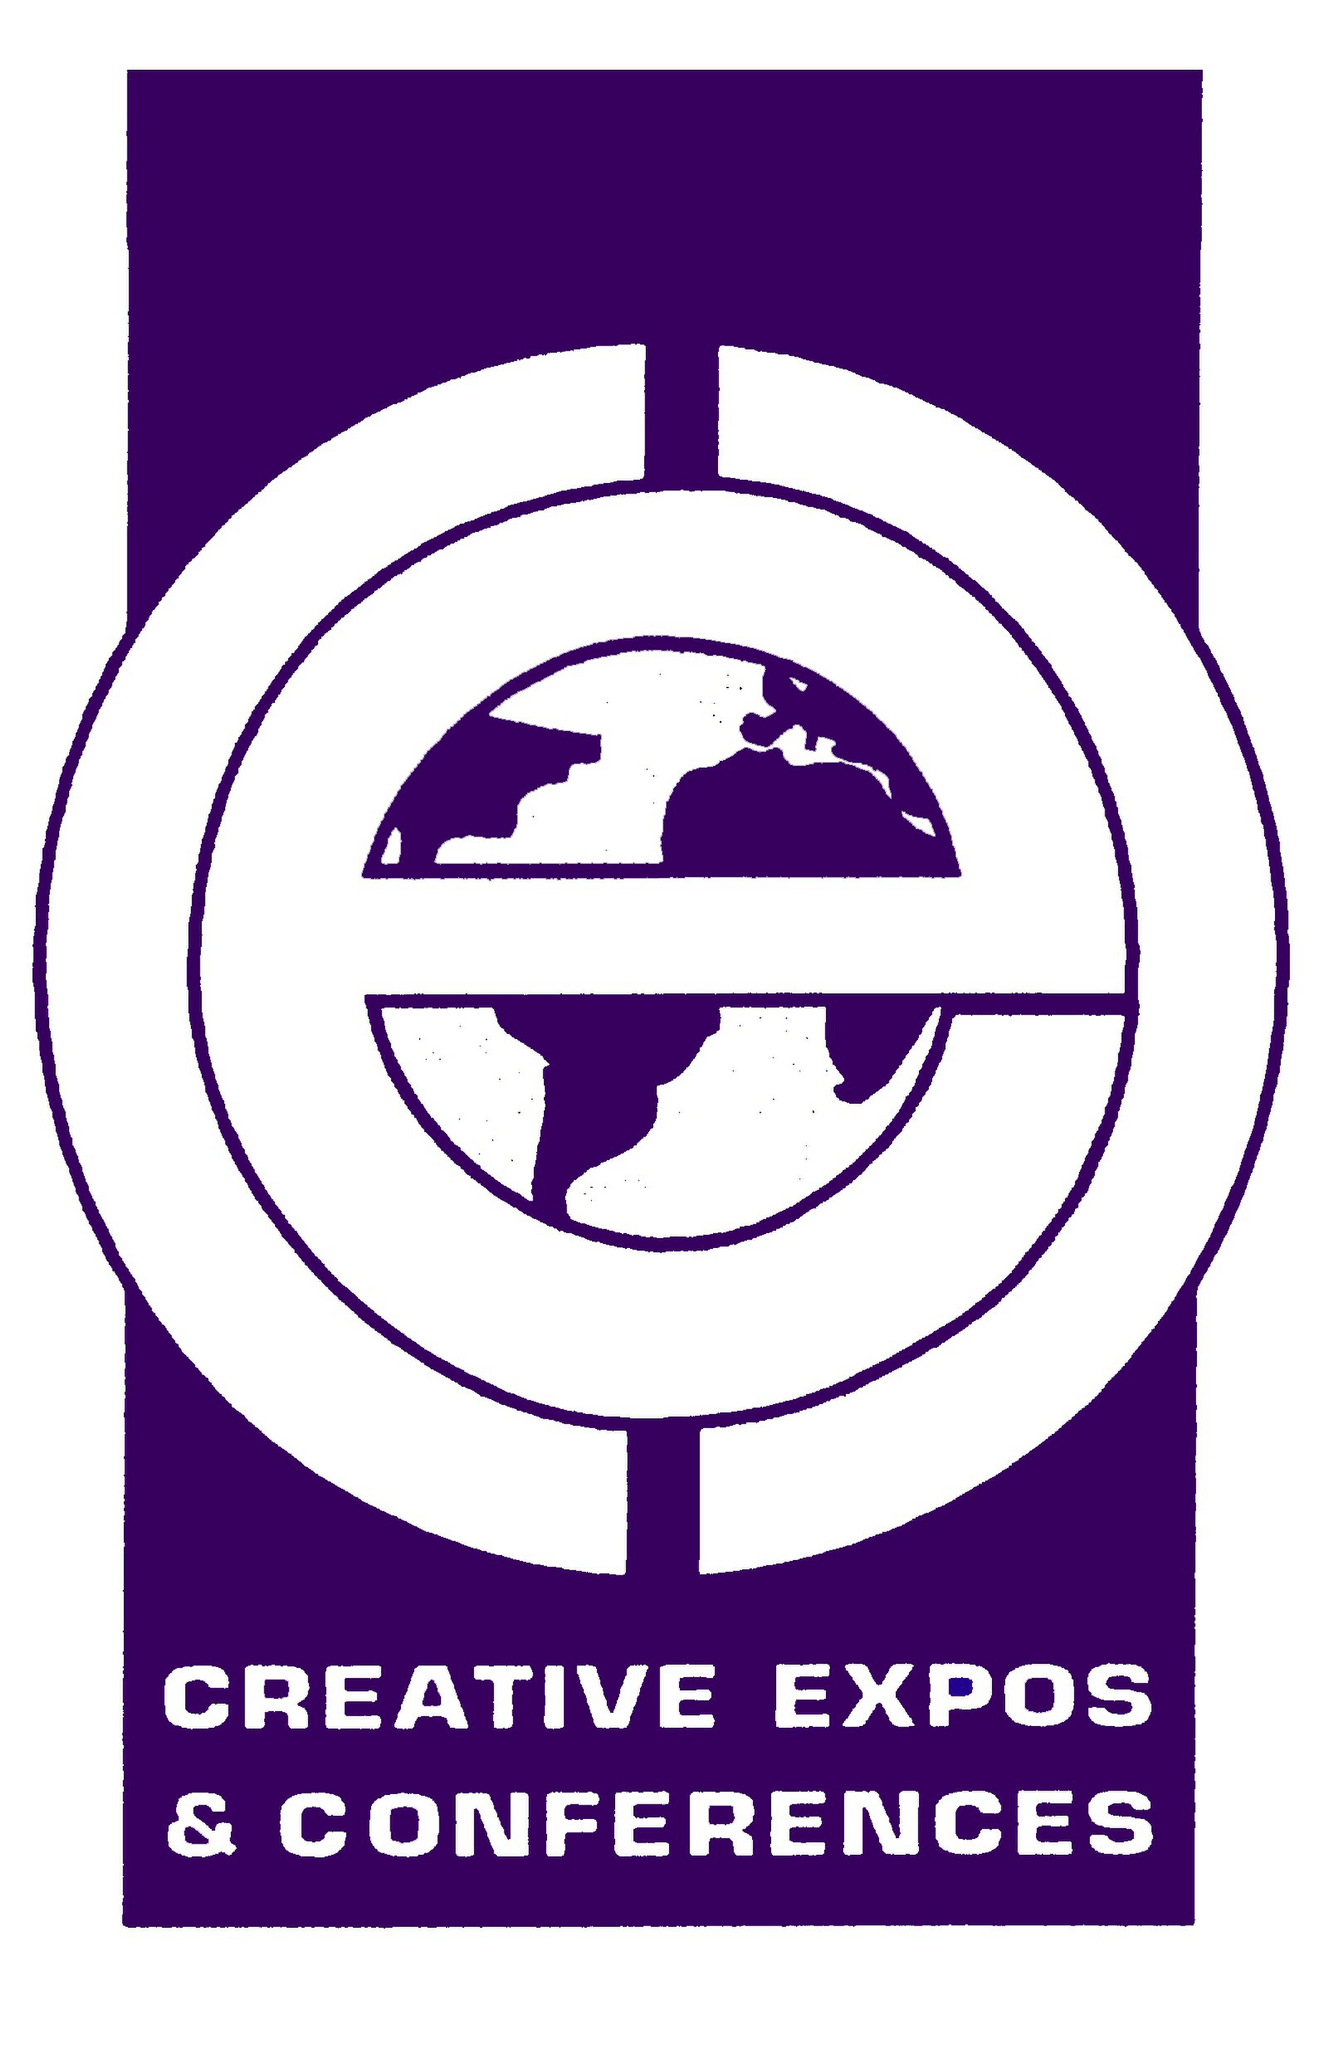 Creative Expos & Conferences